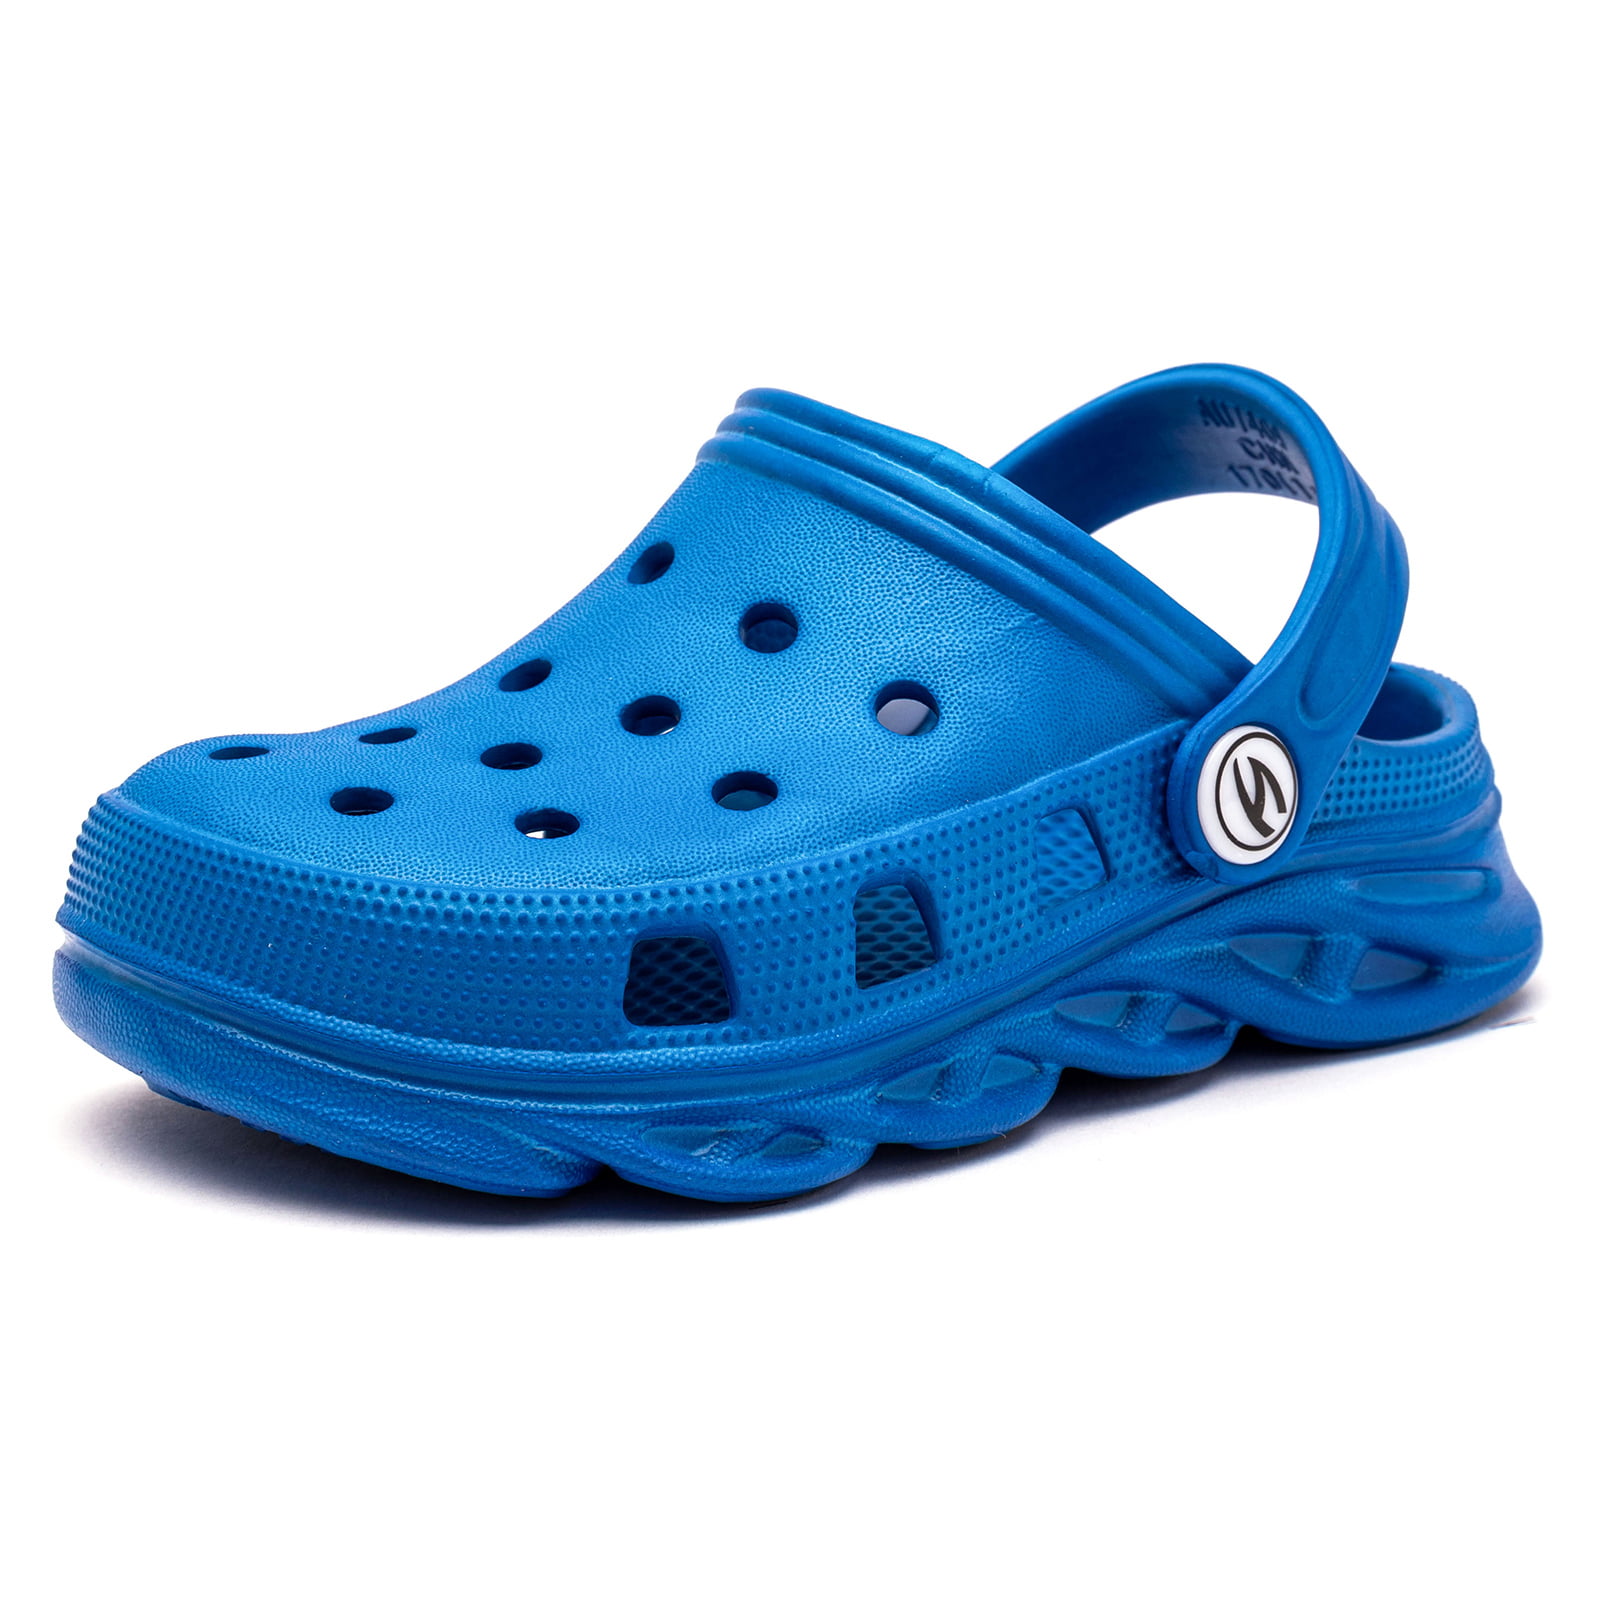 Kids Clogs Home Garden Slip On Water Shoes for Boys Girls Indoor Outdoor Beach Sandals Children Classic Slippers 